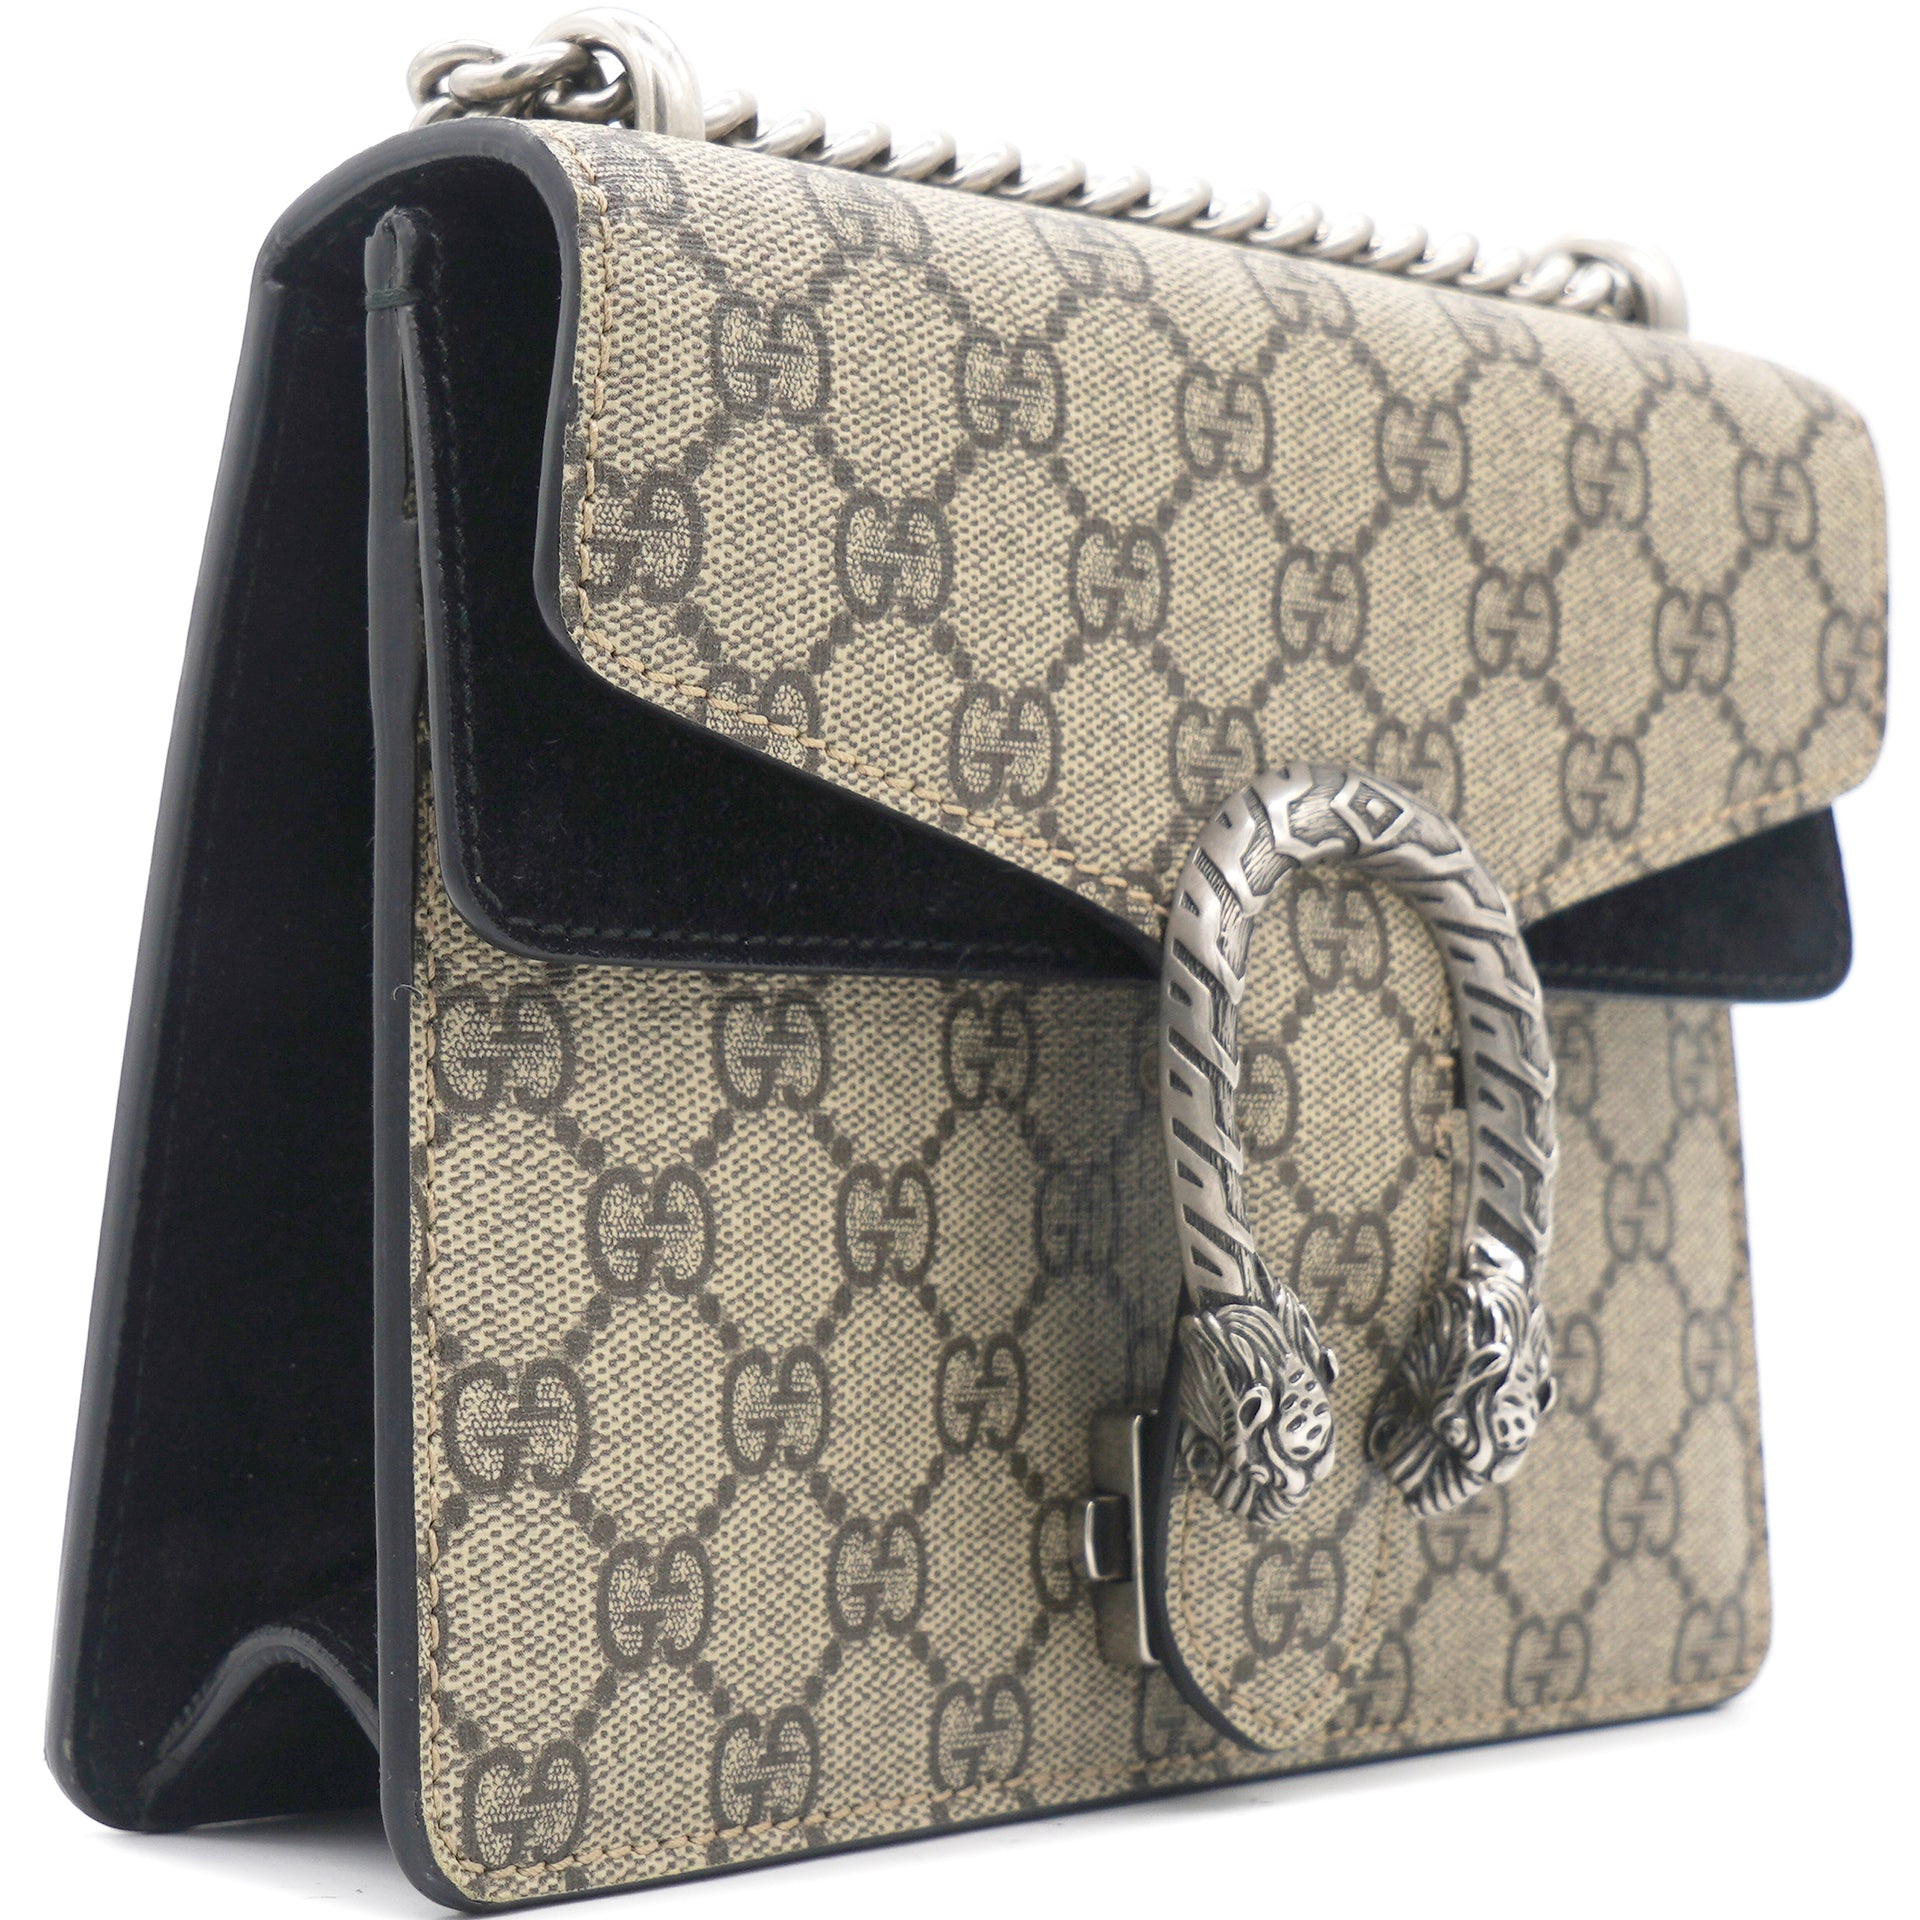 Gucci - NEW Black / Silver Velvet Embossed GG Dionysus Small Shoulder Bag